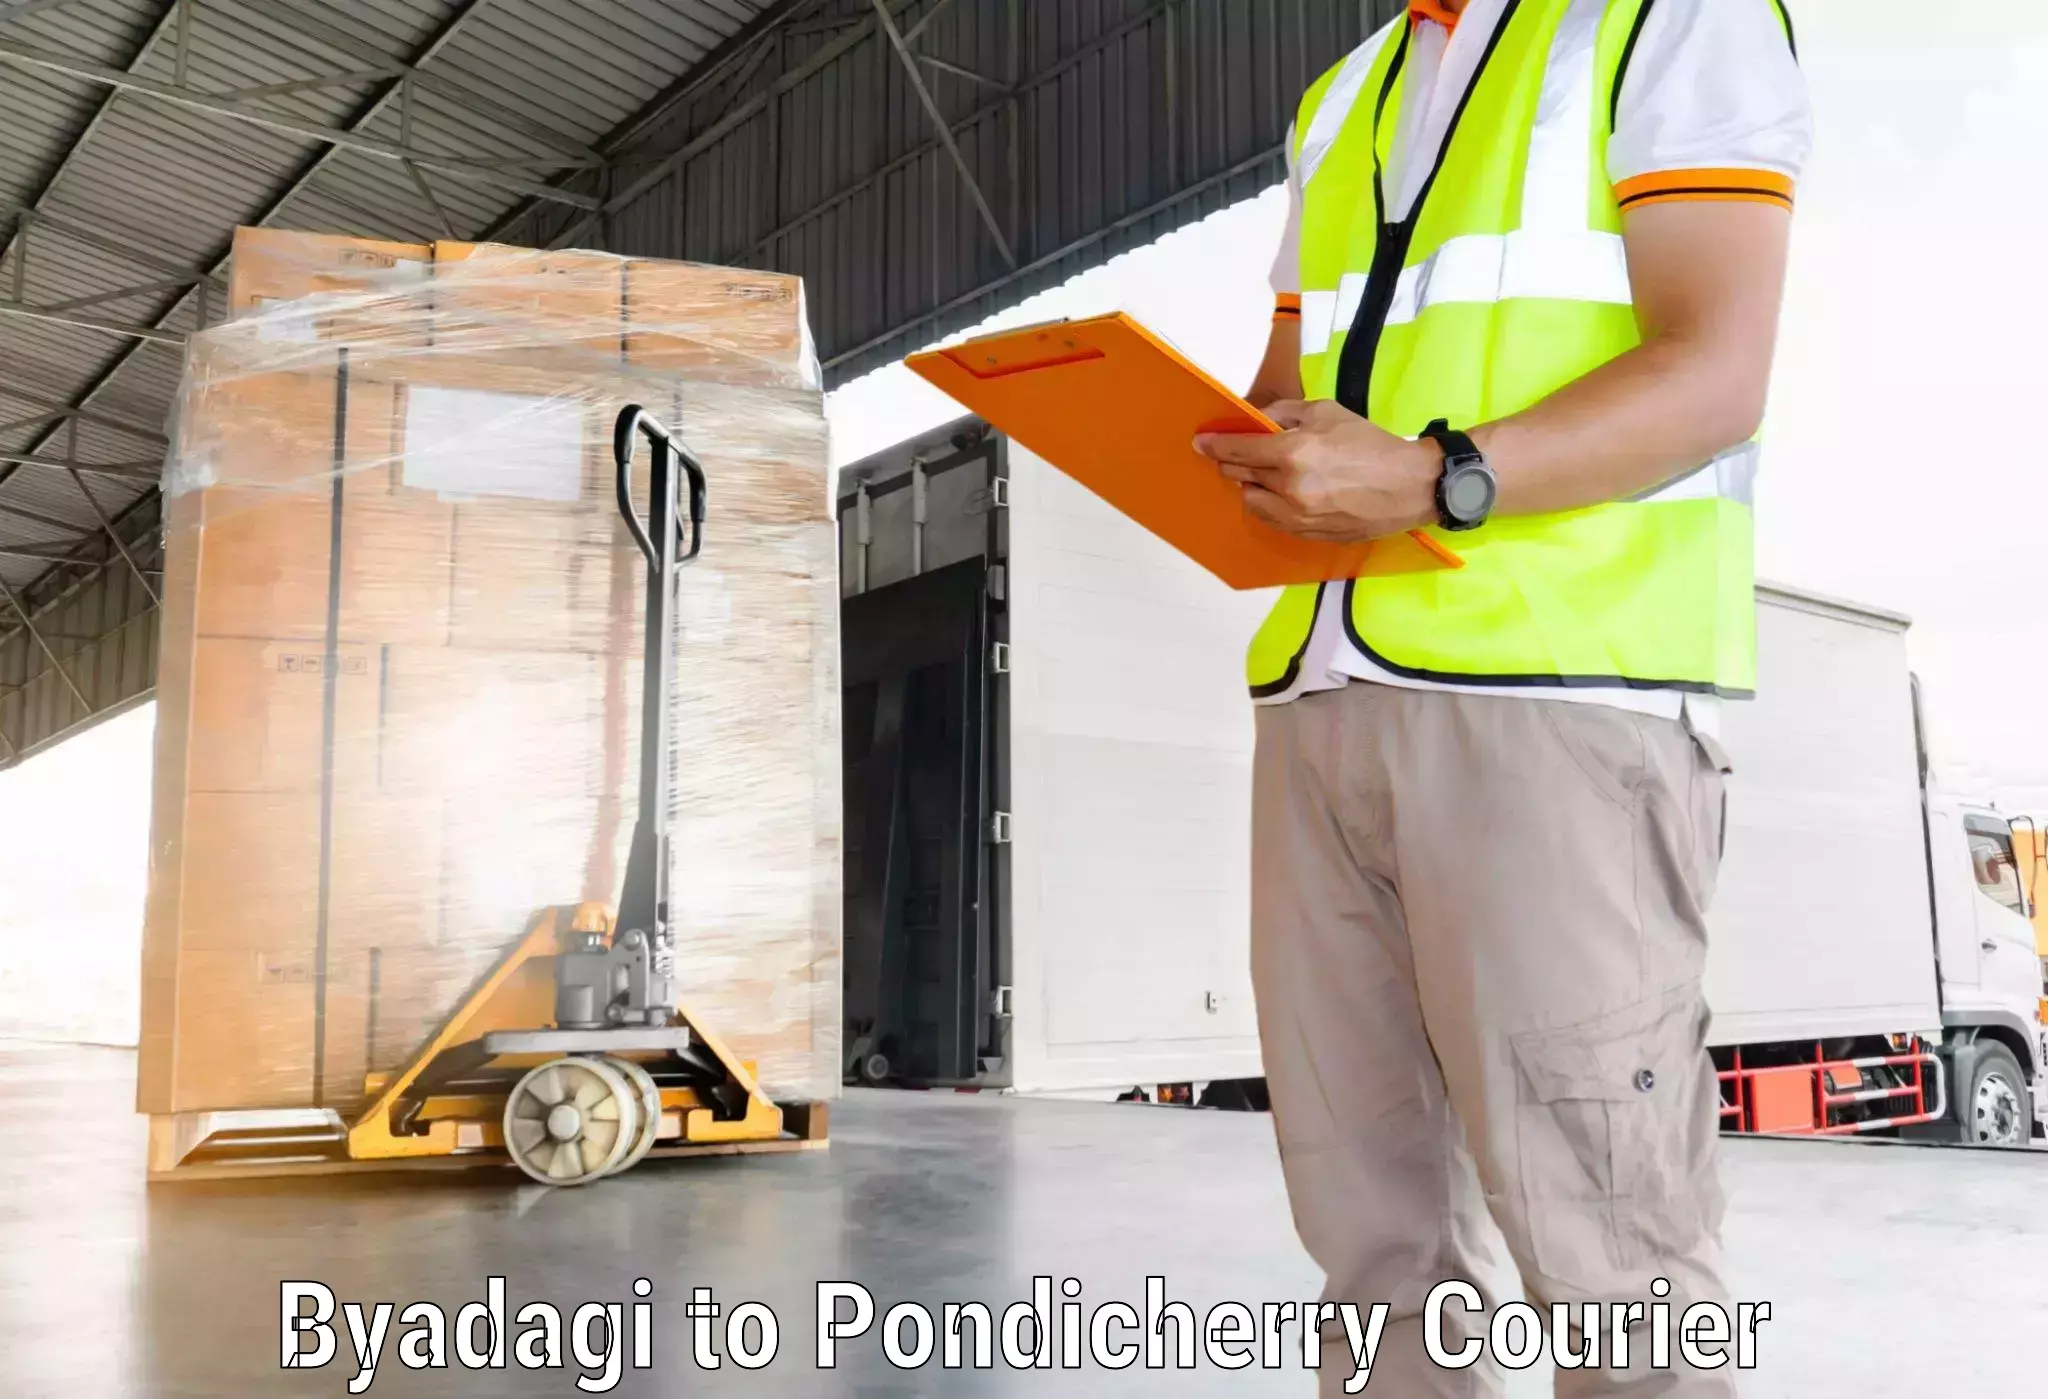 Global logistics network Byadagi to Pondicherry